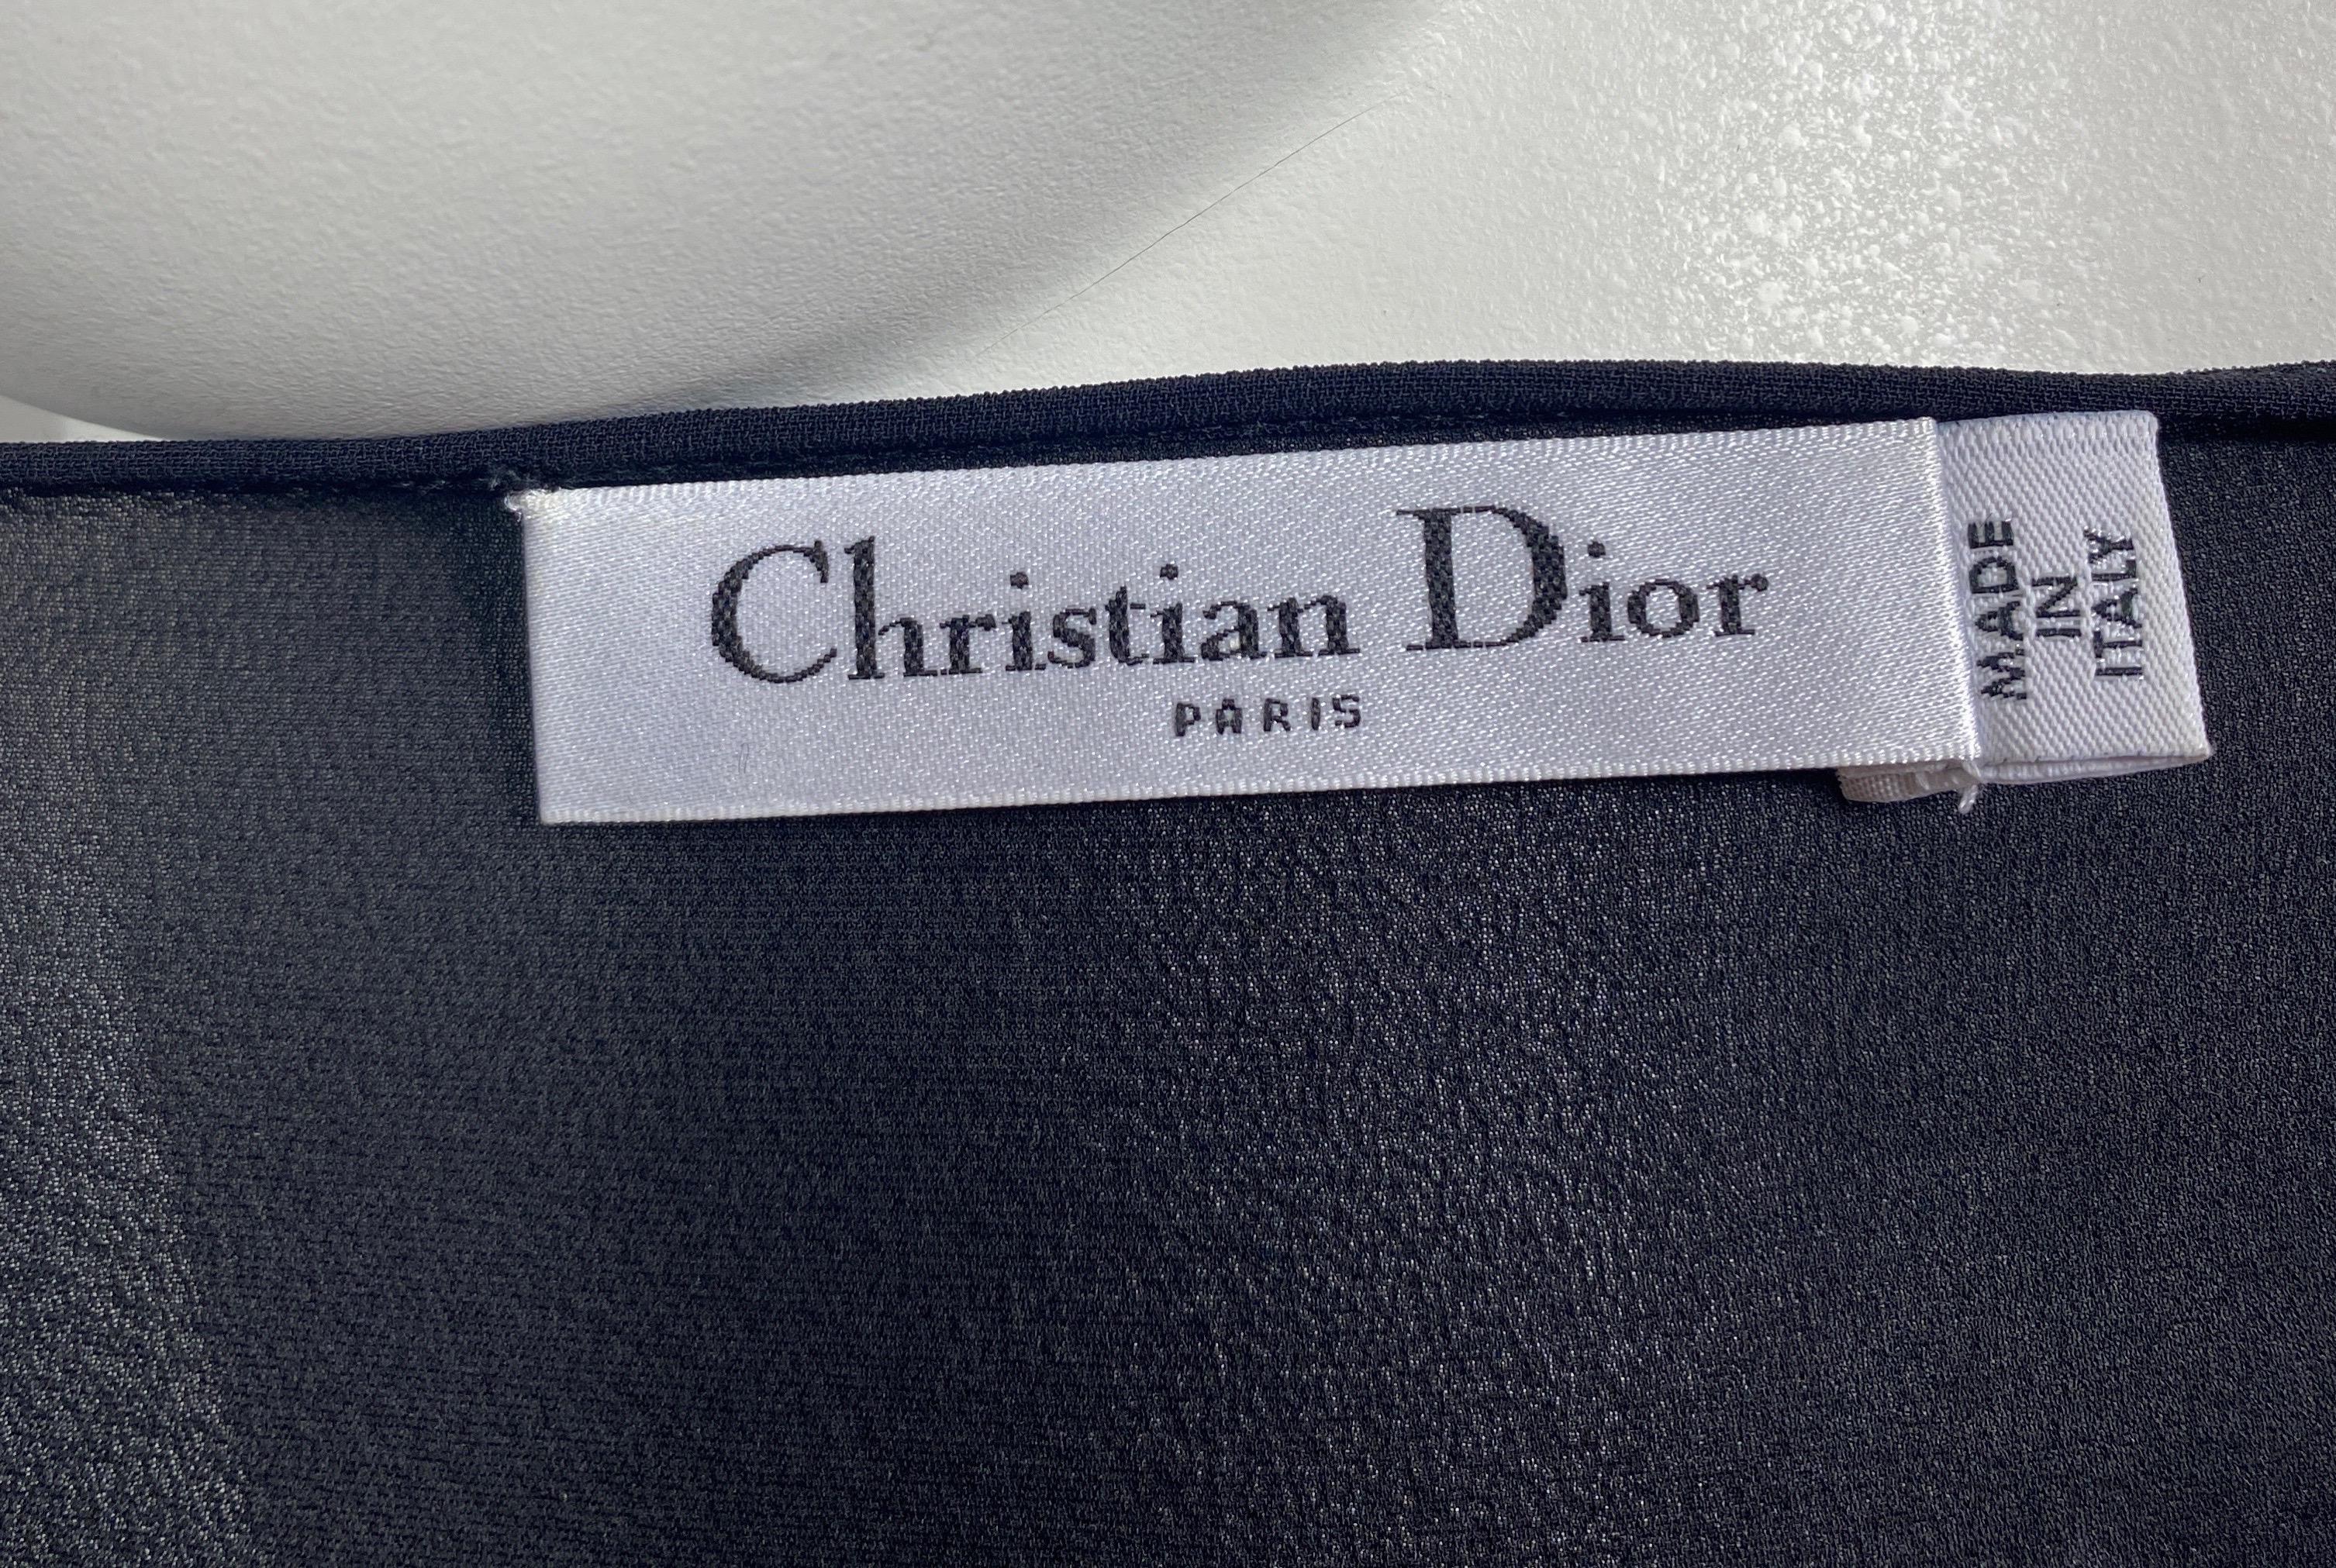 Christian Dior Mini Polka Dot Sheer Mesh Top noir et or - Taille petite en vente 13